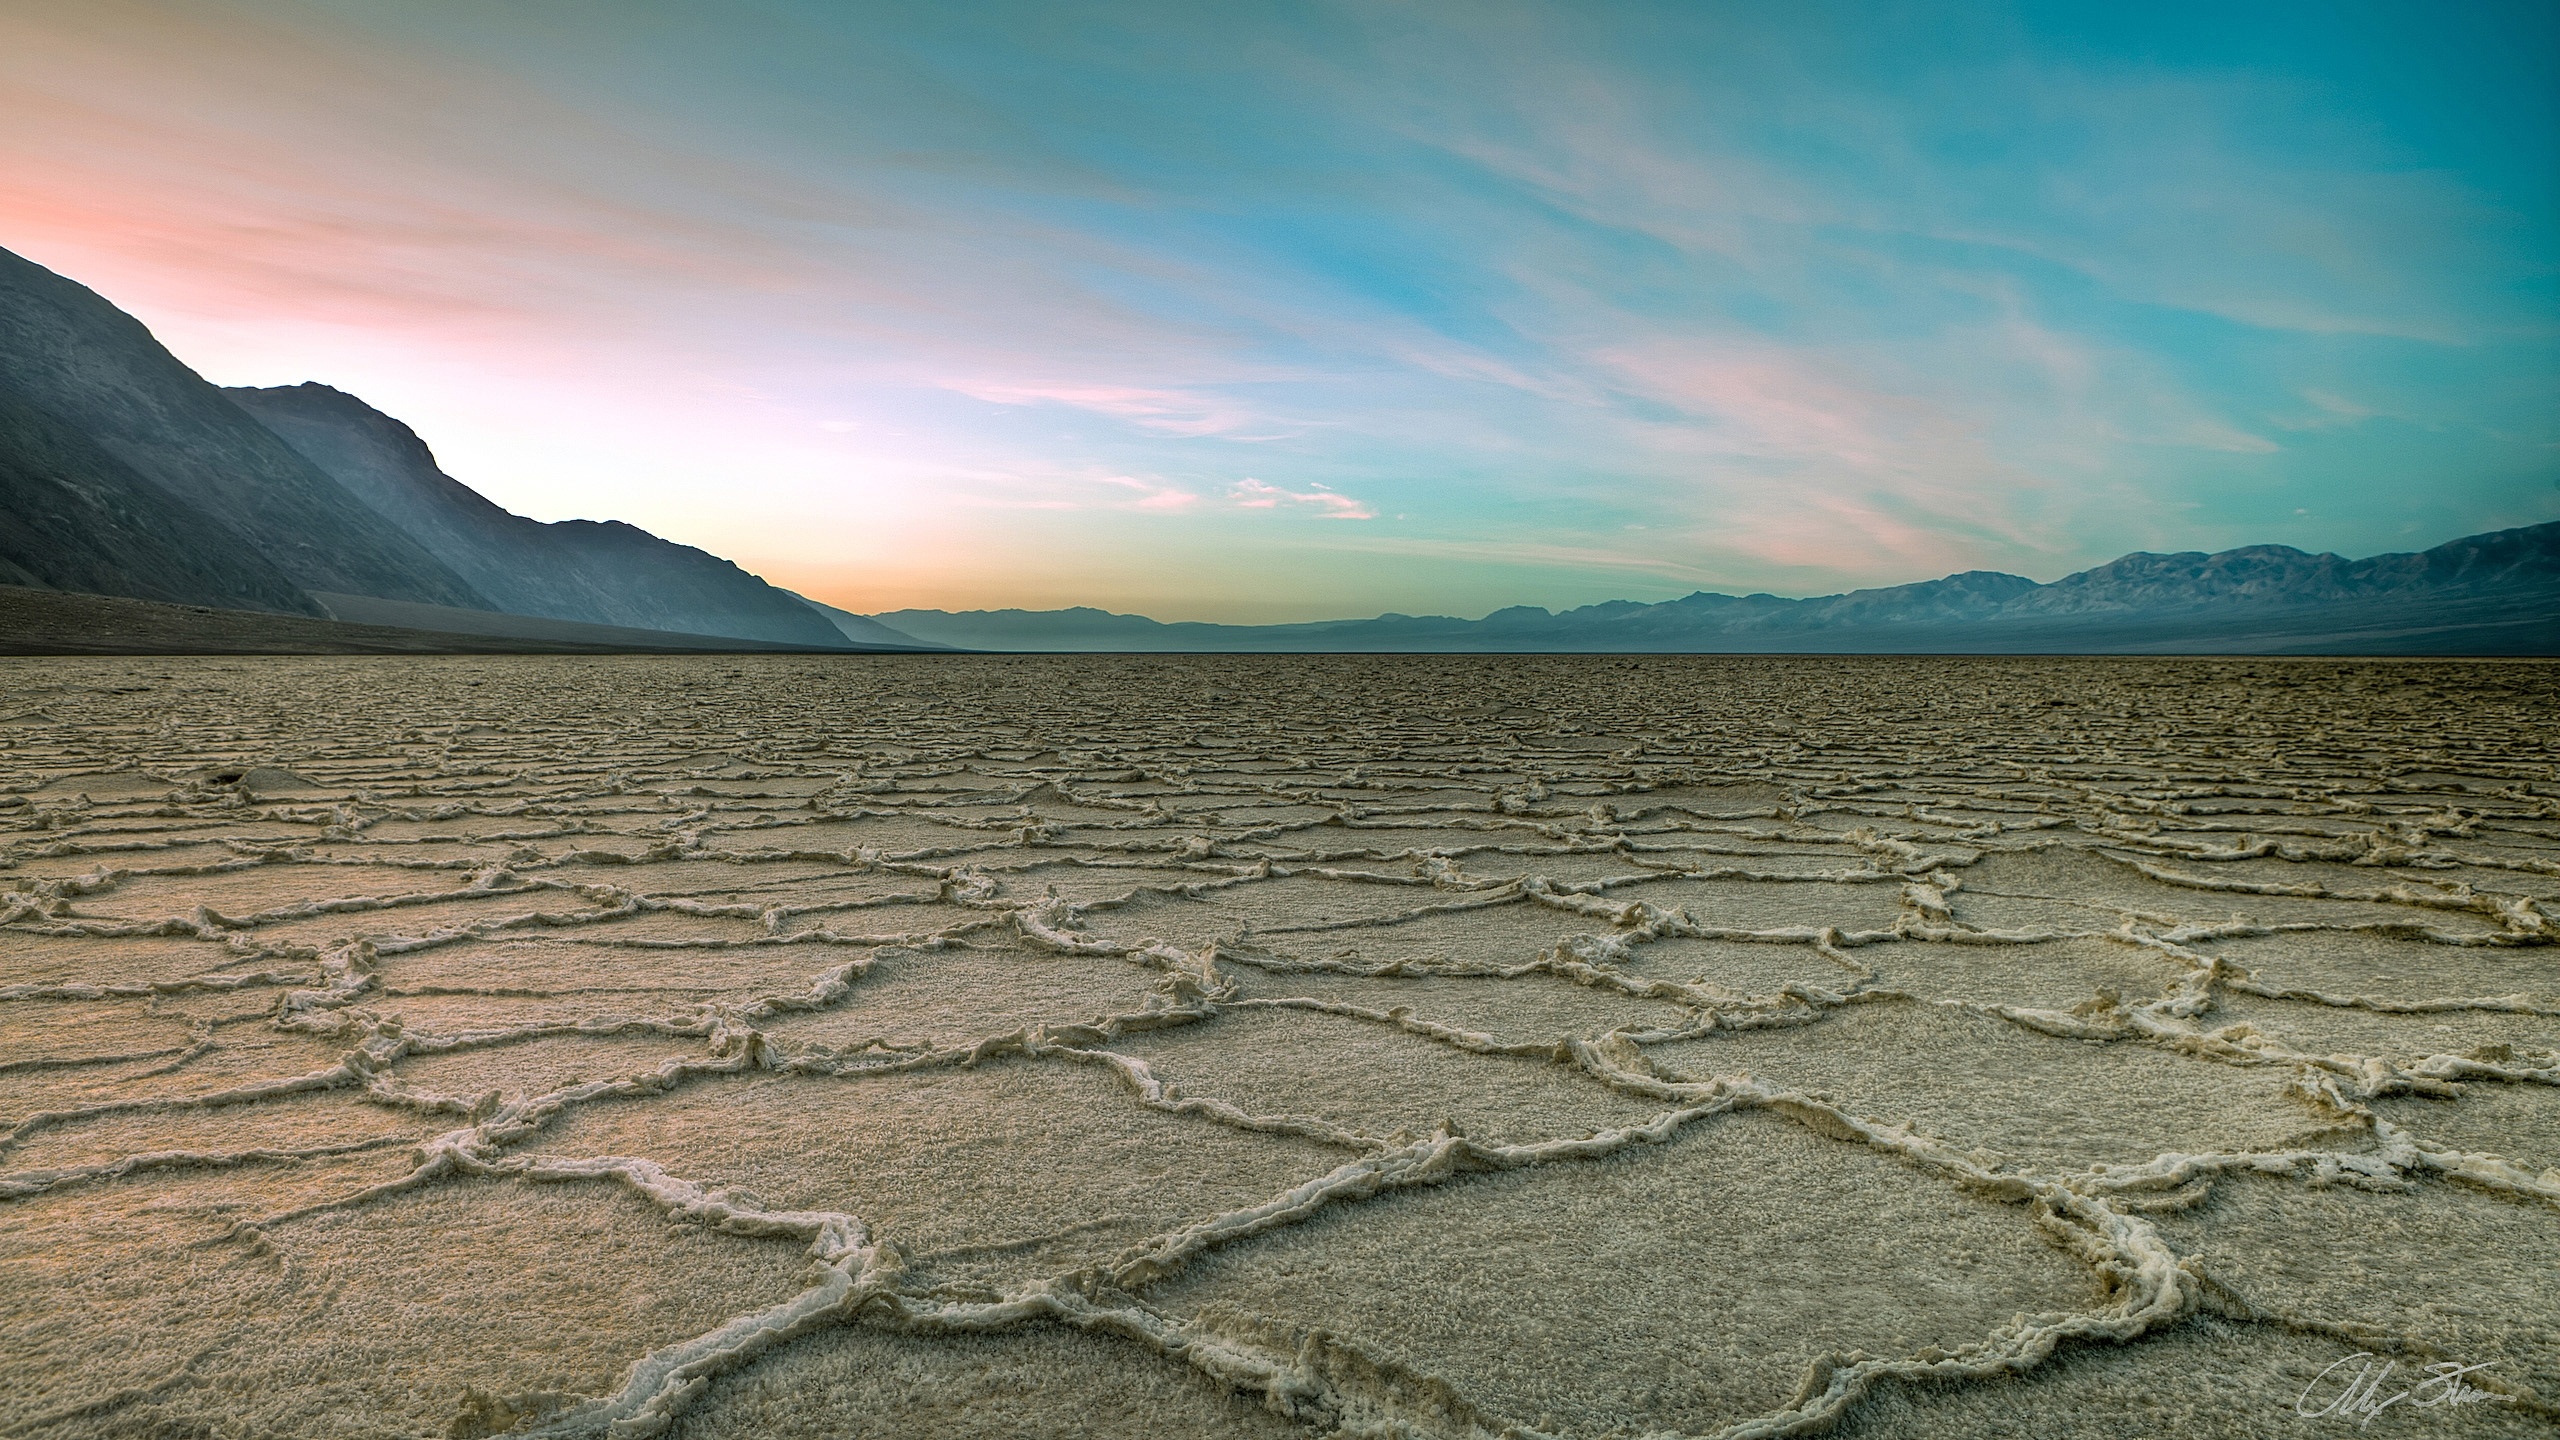 Desolate Photography Landscape Desert Nature Mountains Death Valley California Salt Lakes Plains Sky 2560x1440